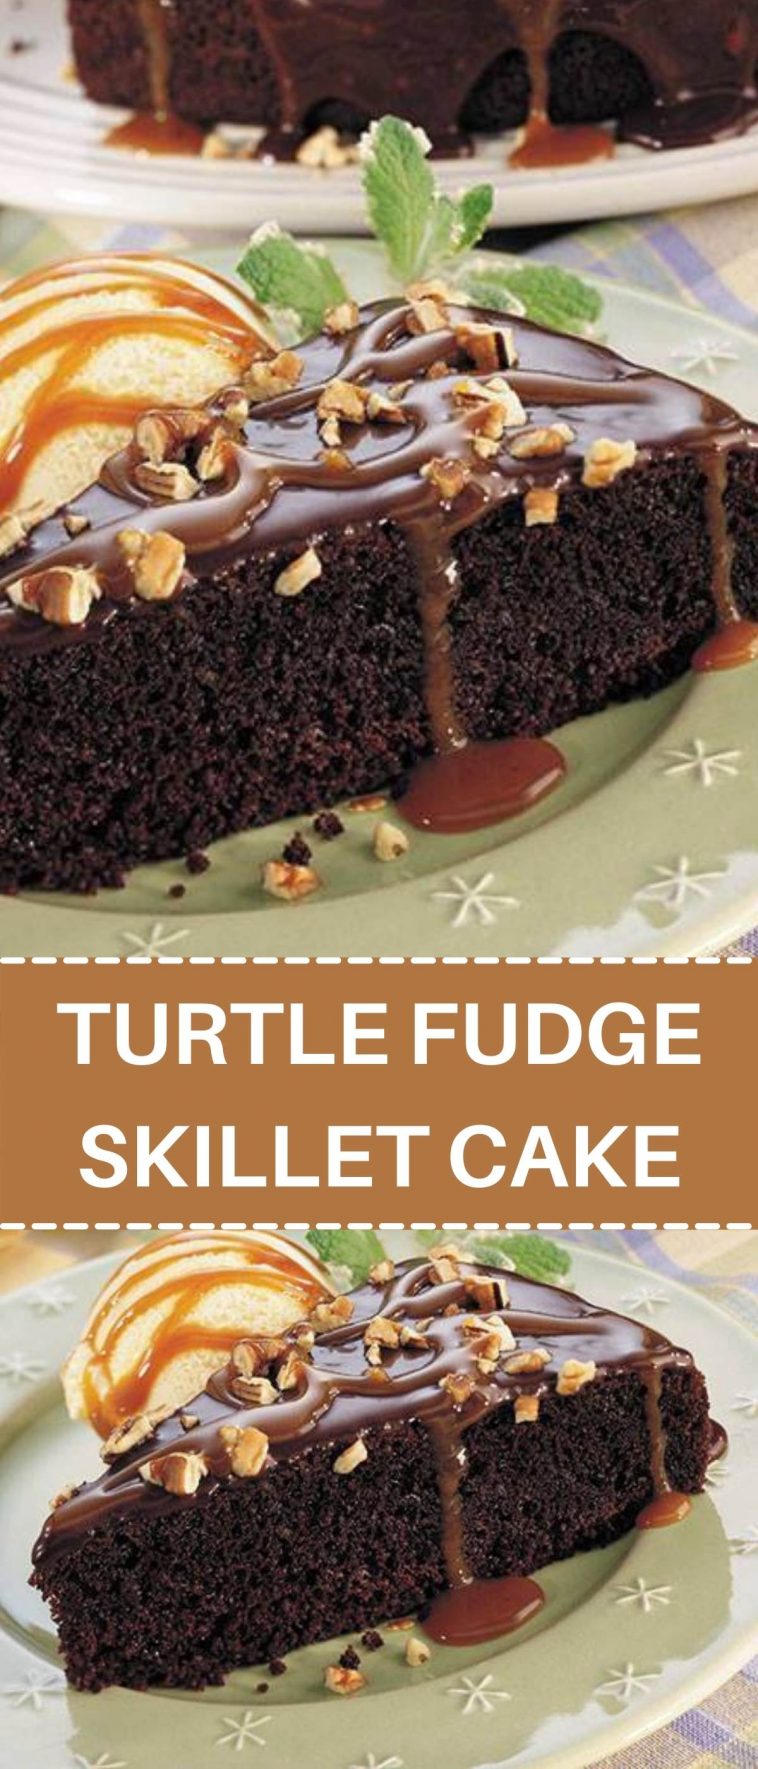 TURTLE FUDGE SKILLET CAKE